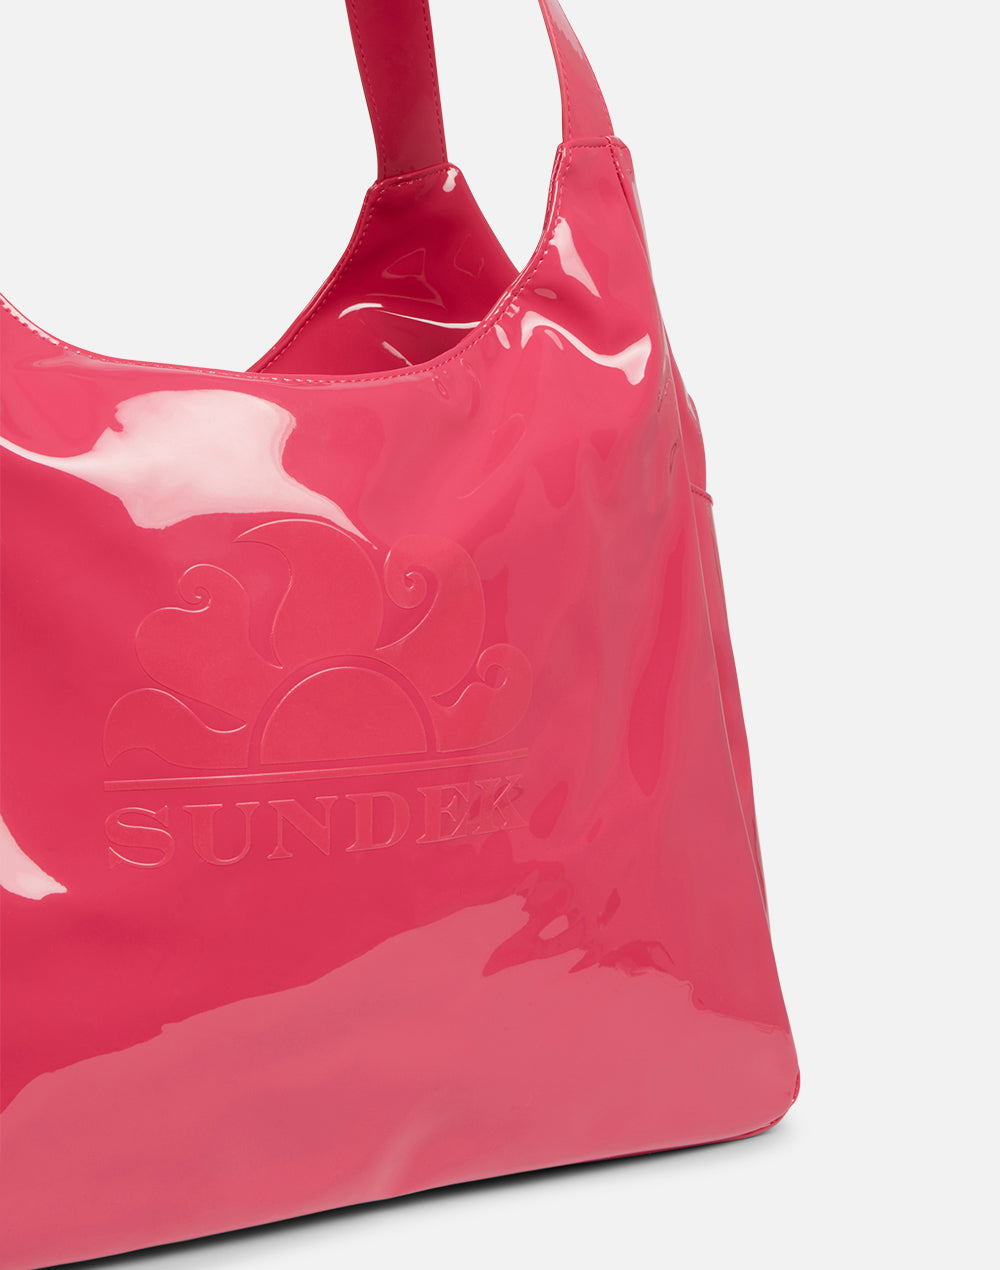 $45 Seafolly Women's Brown Woven Paper Handbag Large Basket Tote Bag One  Size | eBay